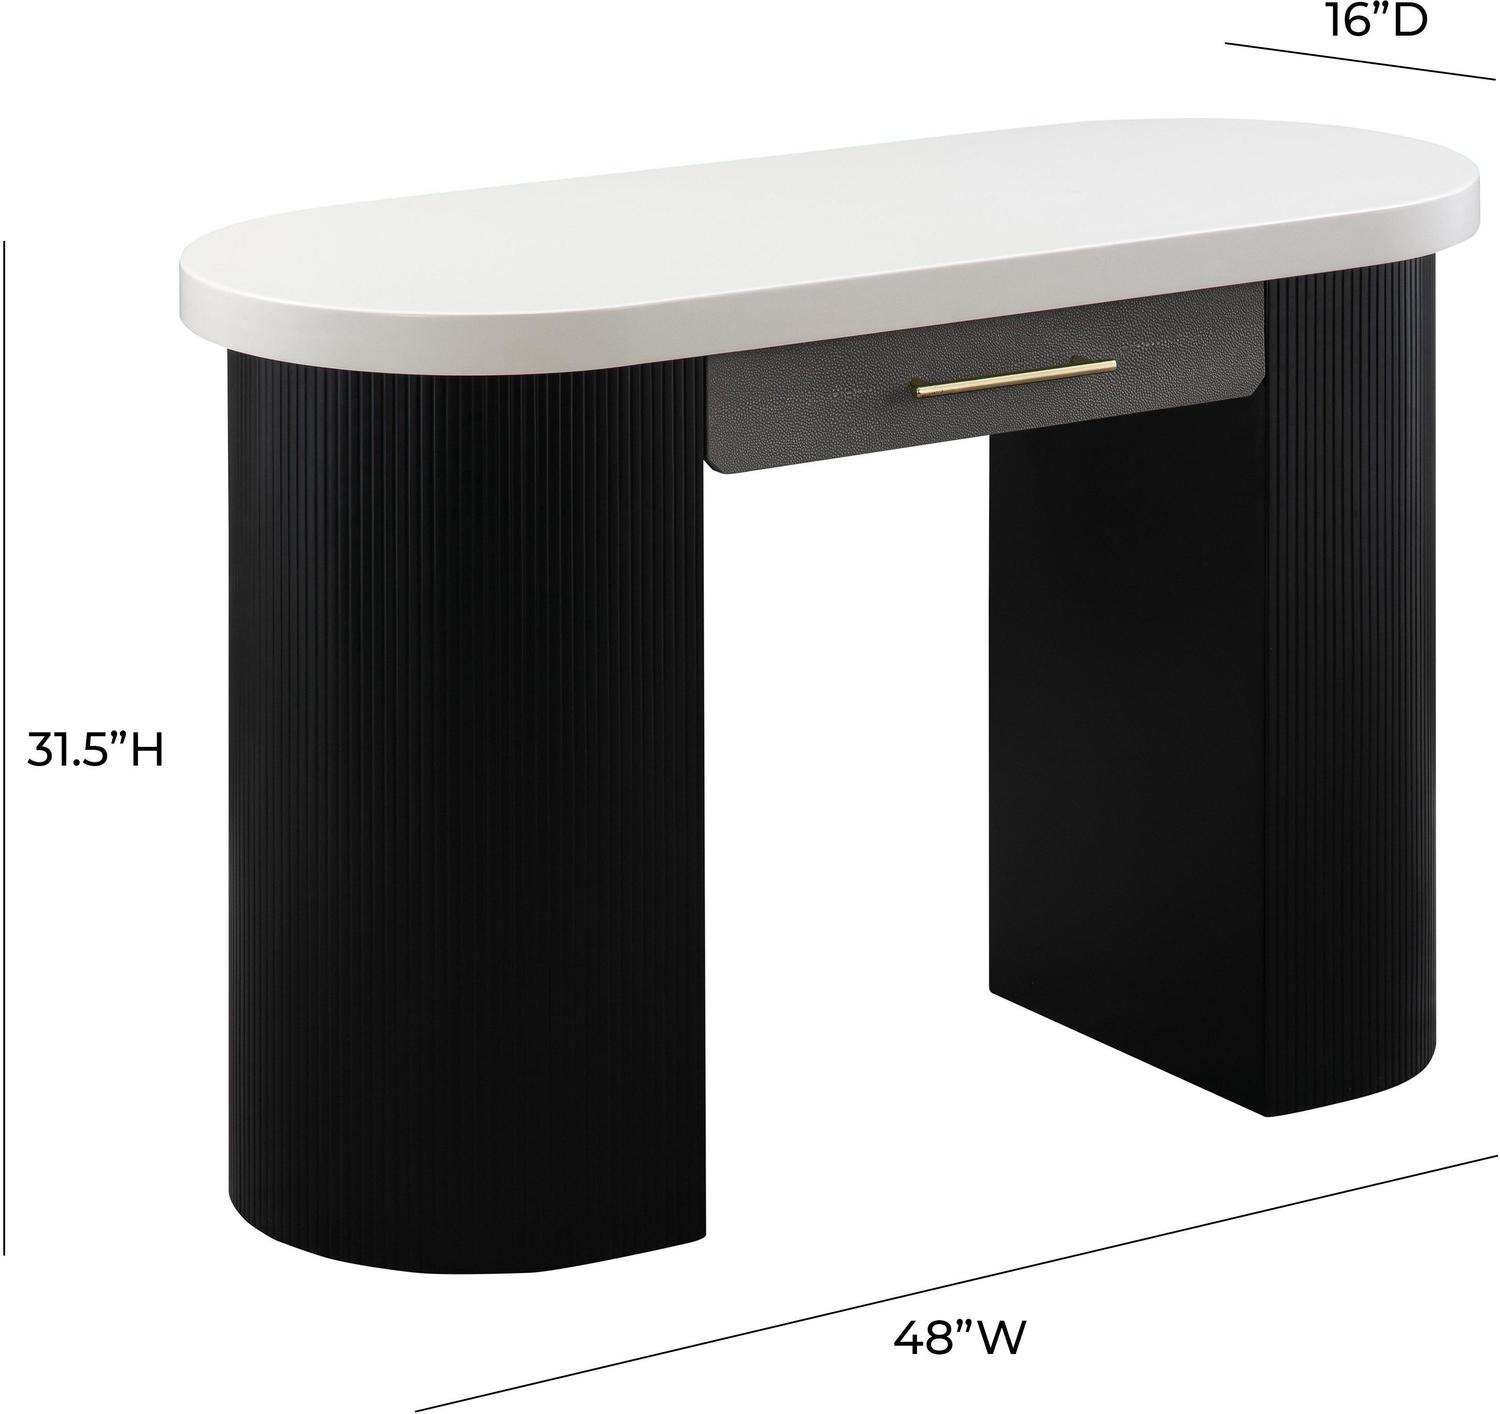 storage desk with drawers Tov Furniture Desks Charcoal,Cream